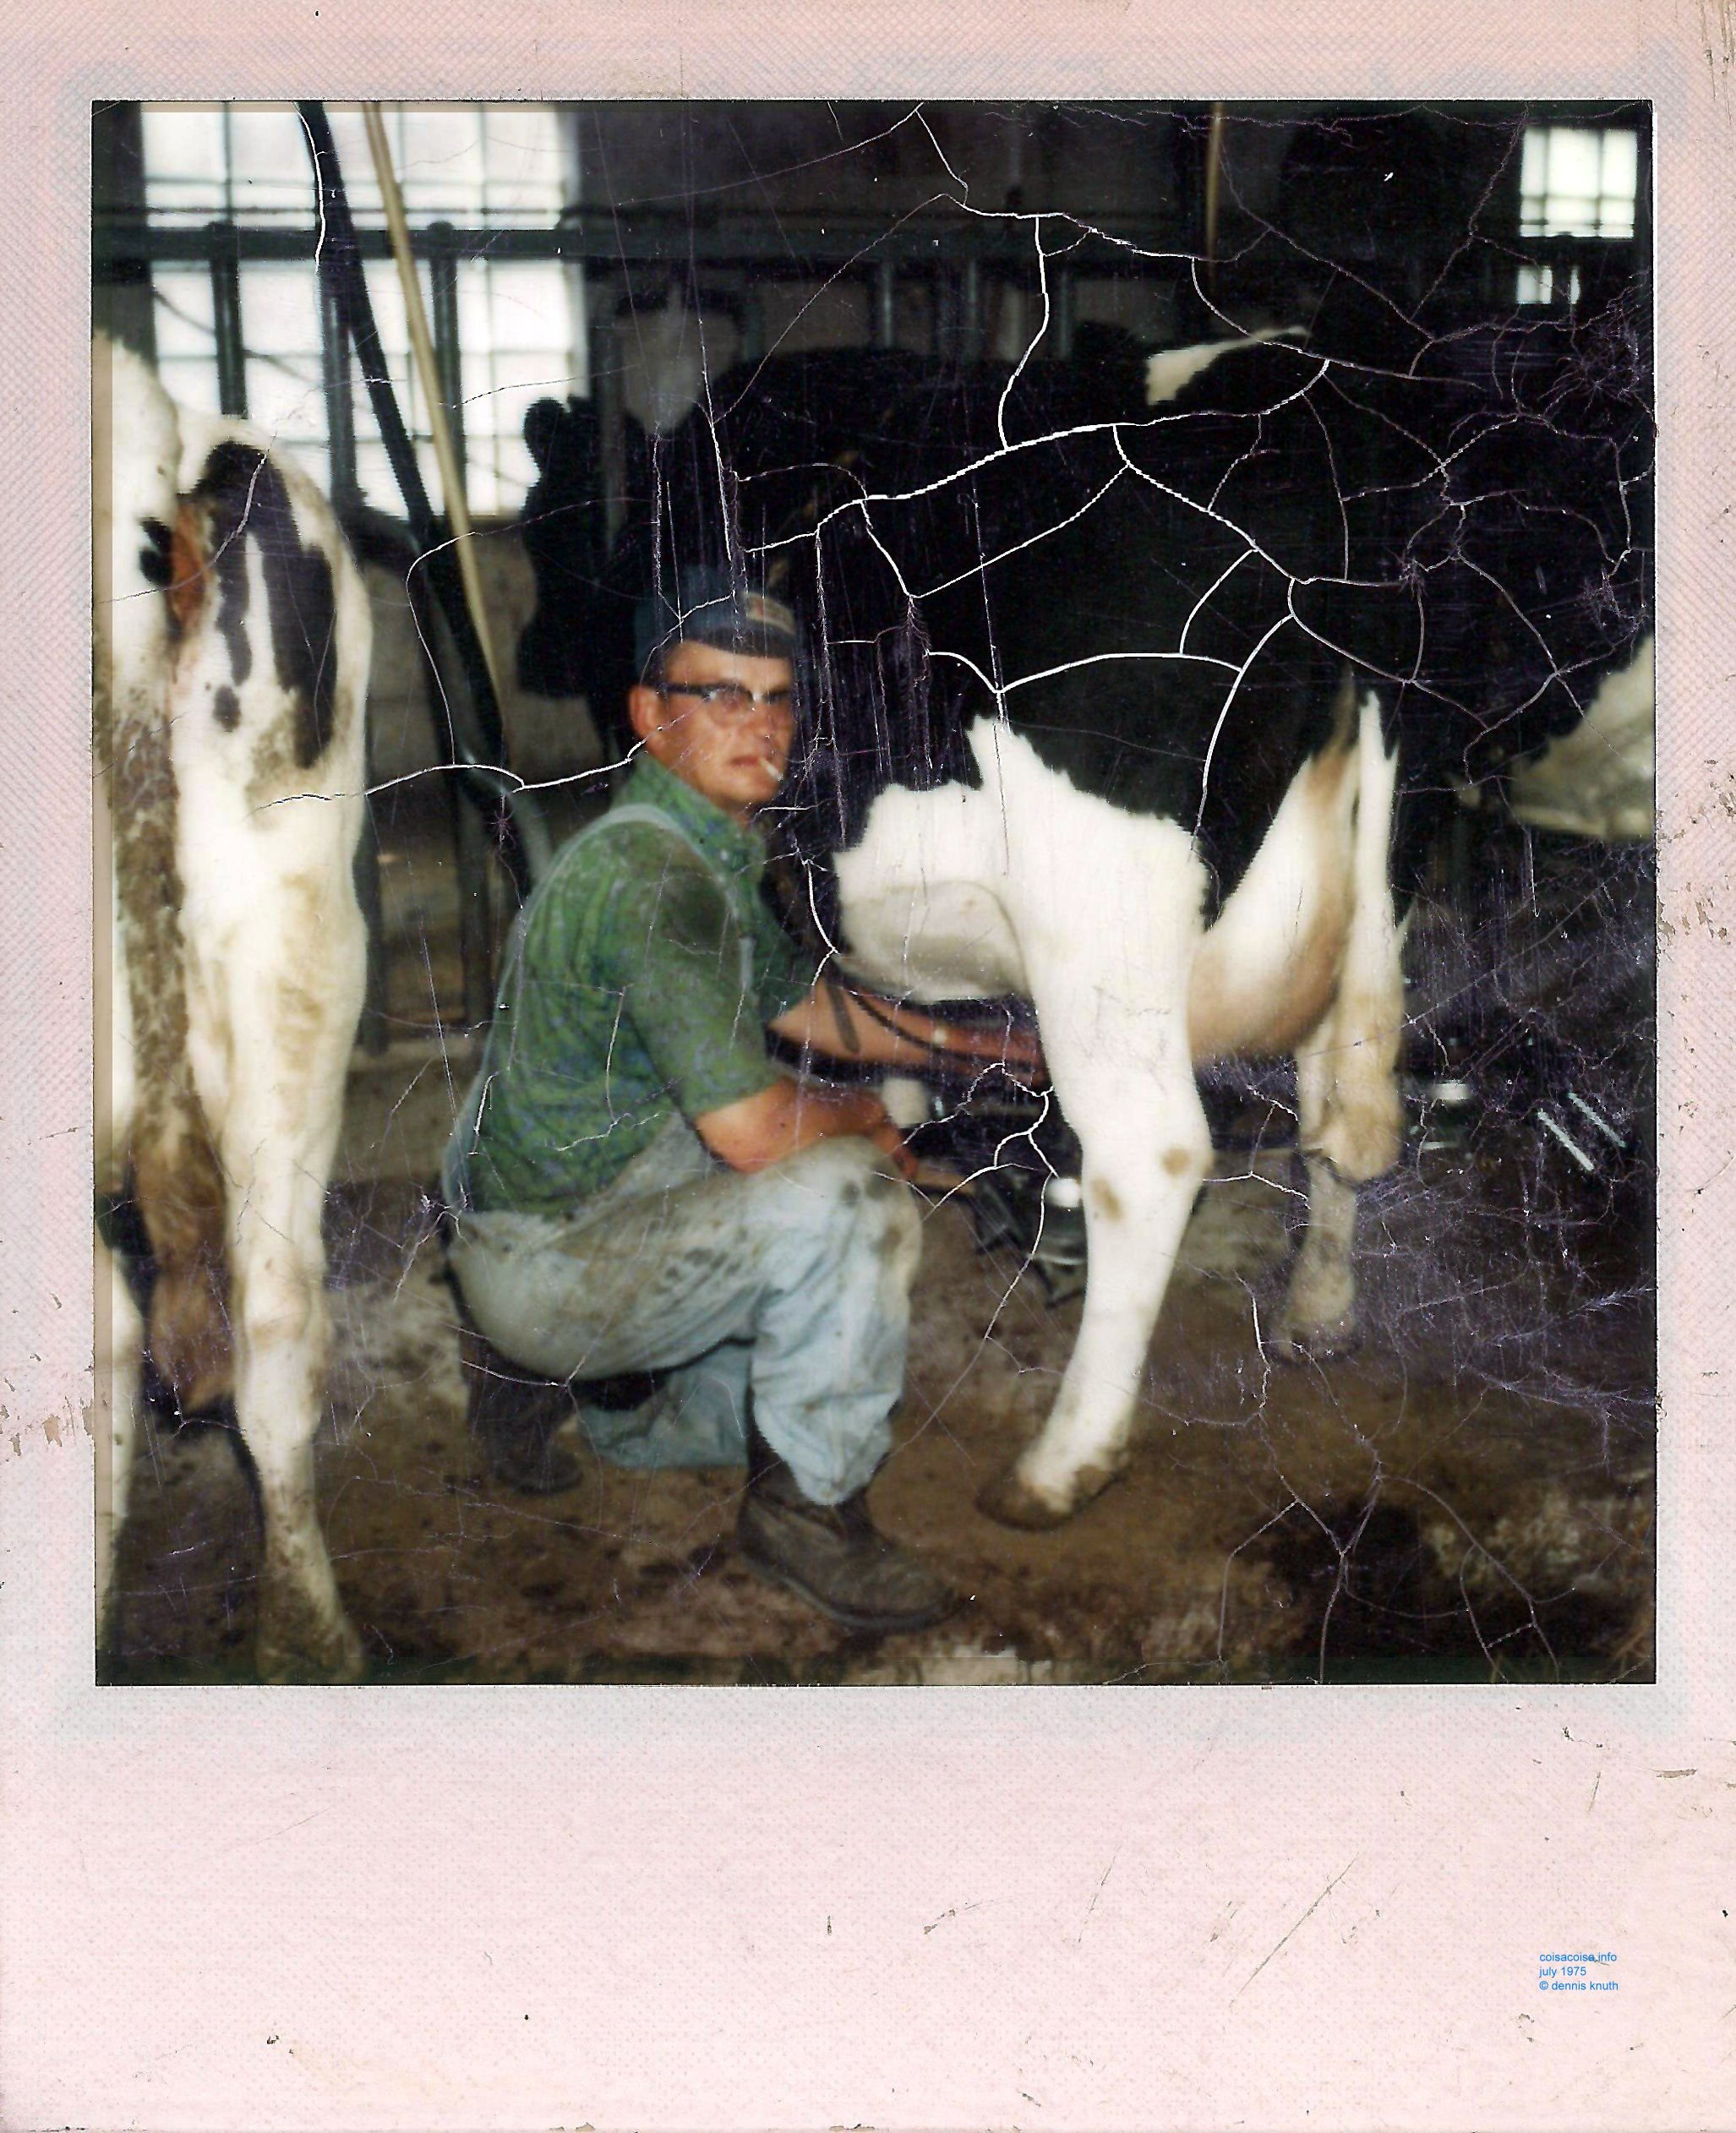 John Knuth milking cows on Sherri's wedding weekend